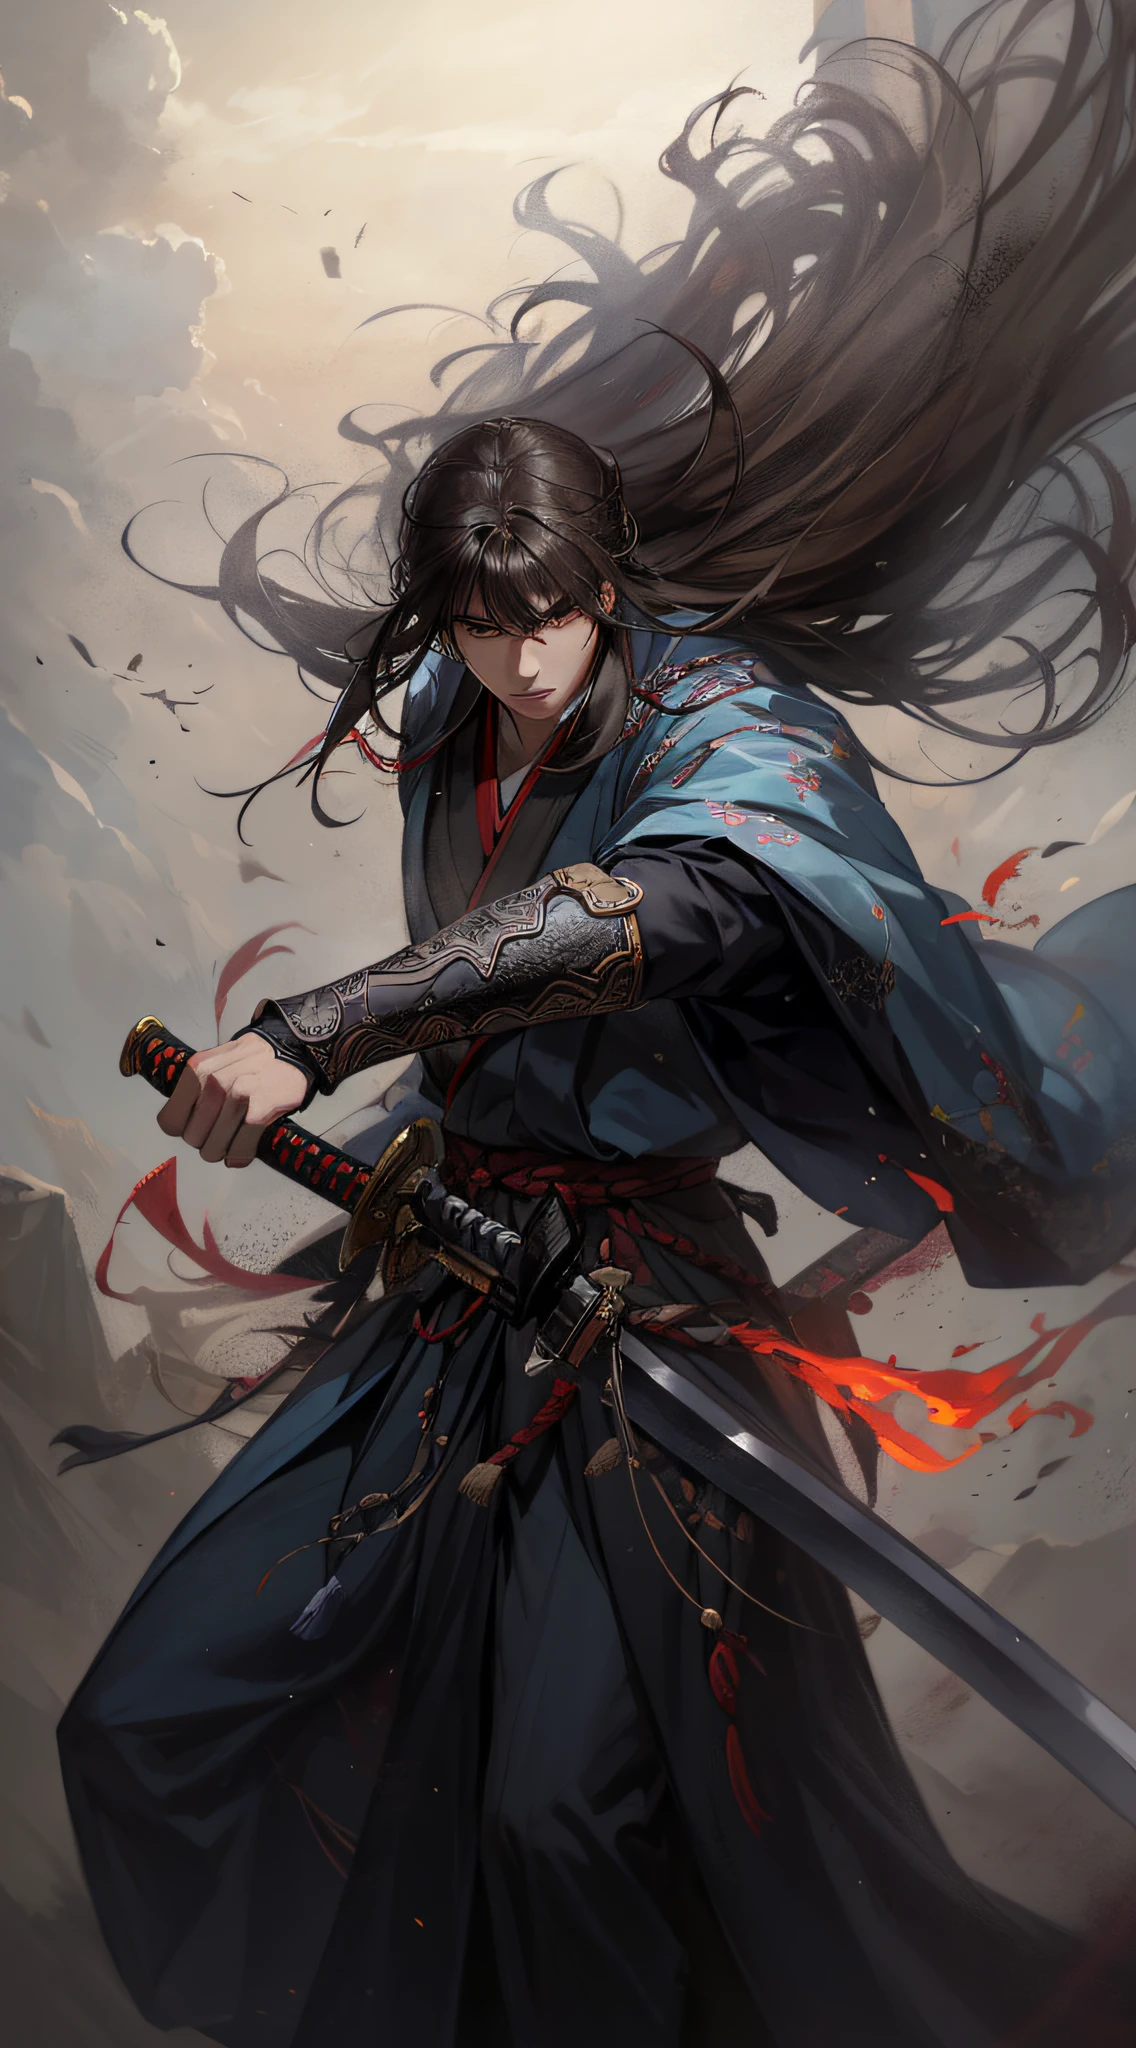 a samurai，長髪の，漢服，ローブ，剣，ハンサムな顔の形，リアルな：1.2